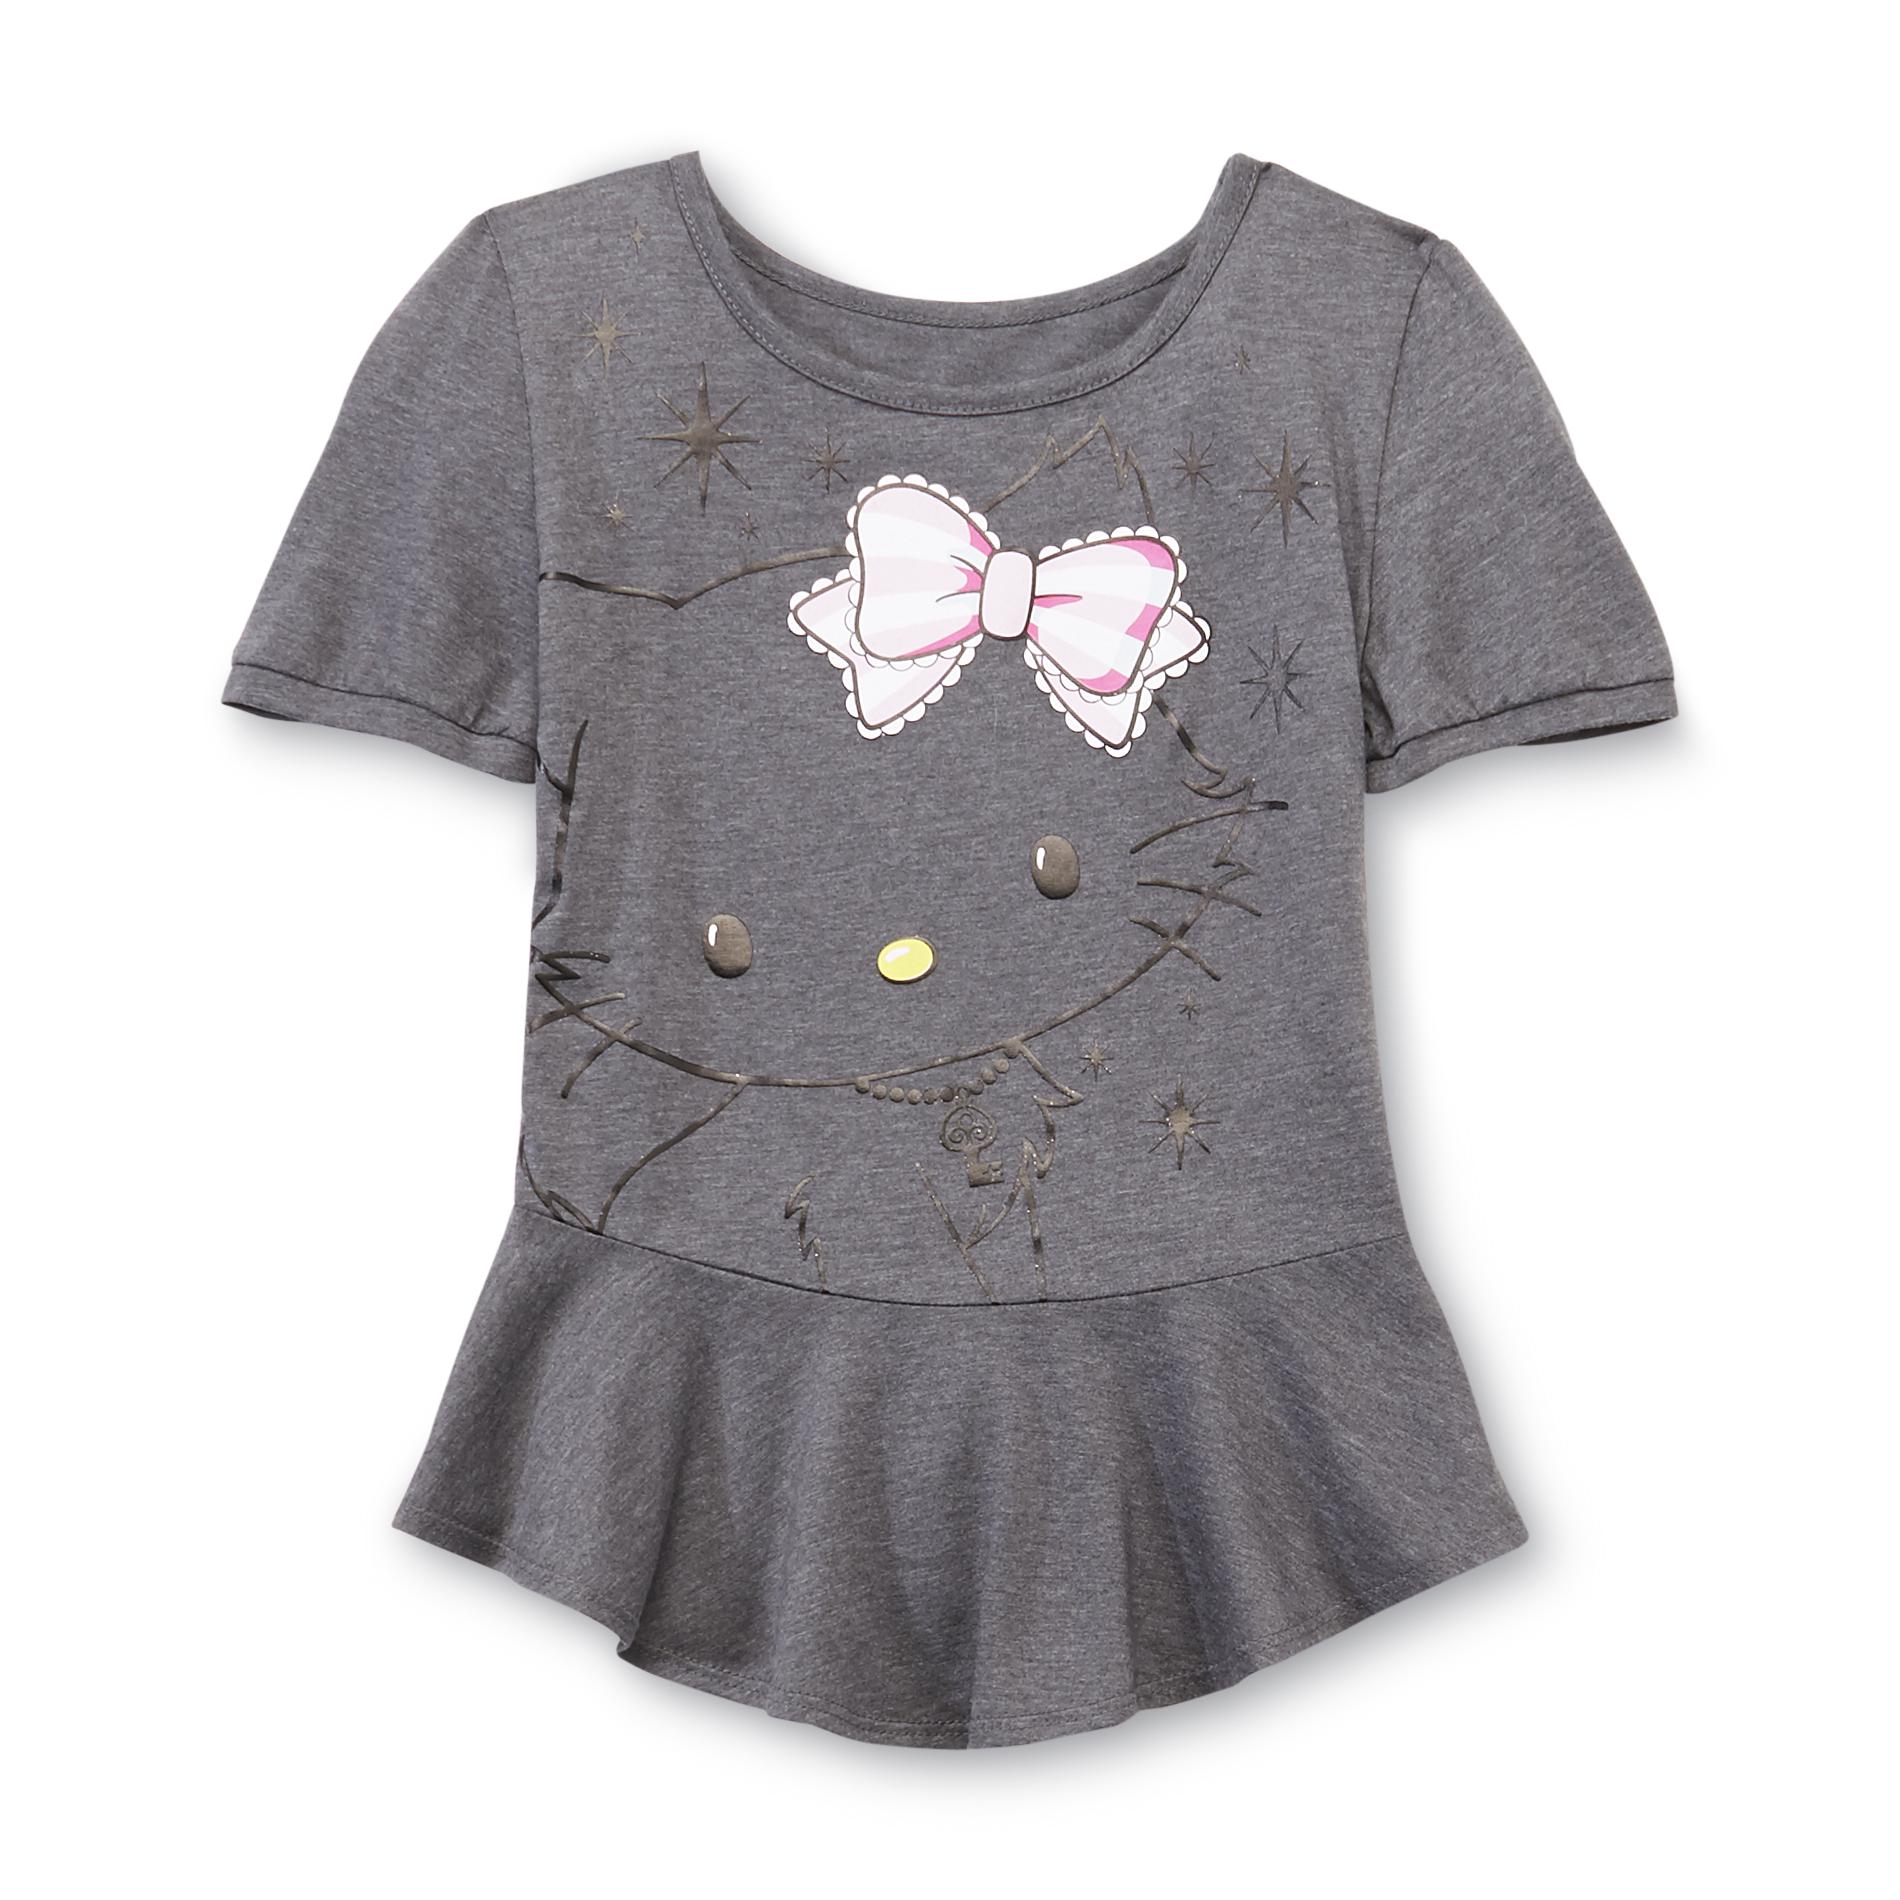 Hello Kitty Girl's T-Shirt - Charmmy Kitty